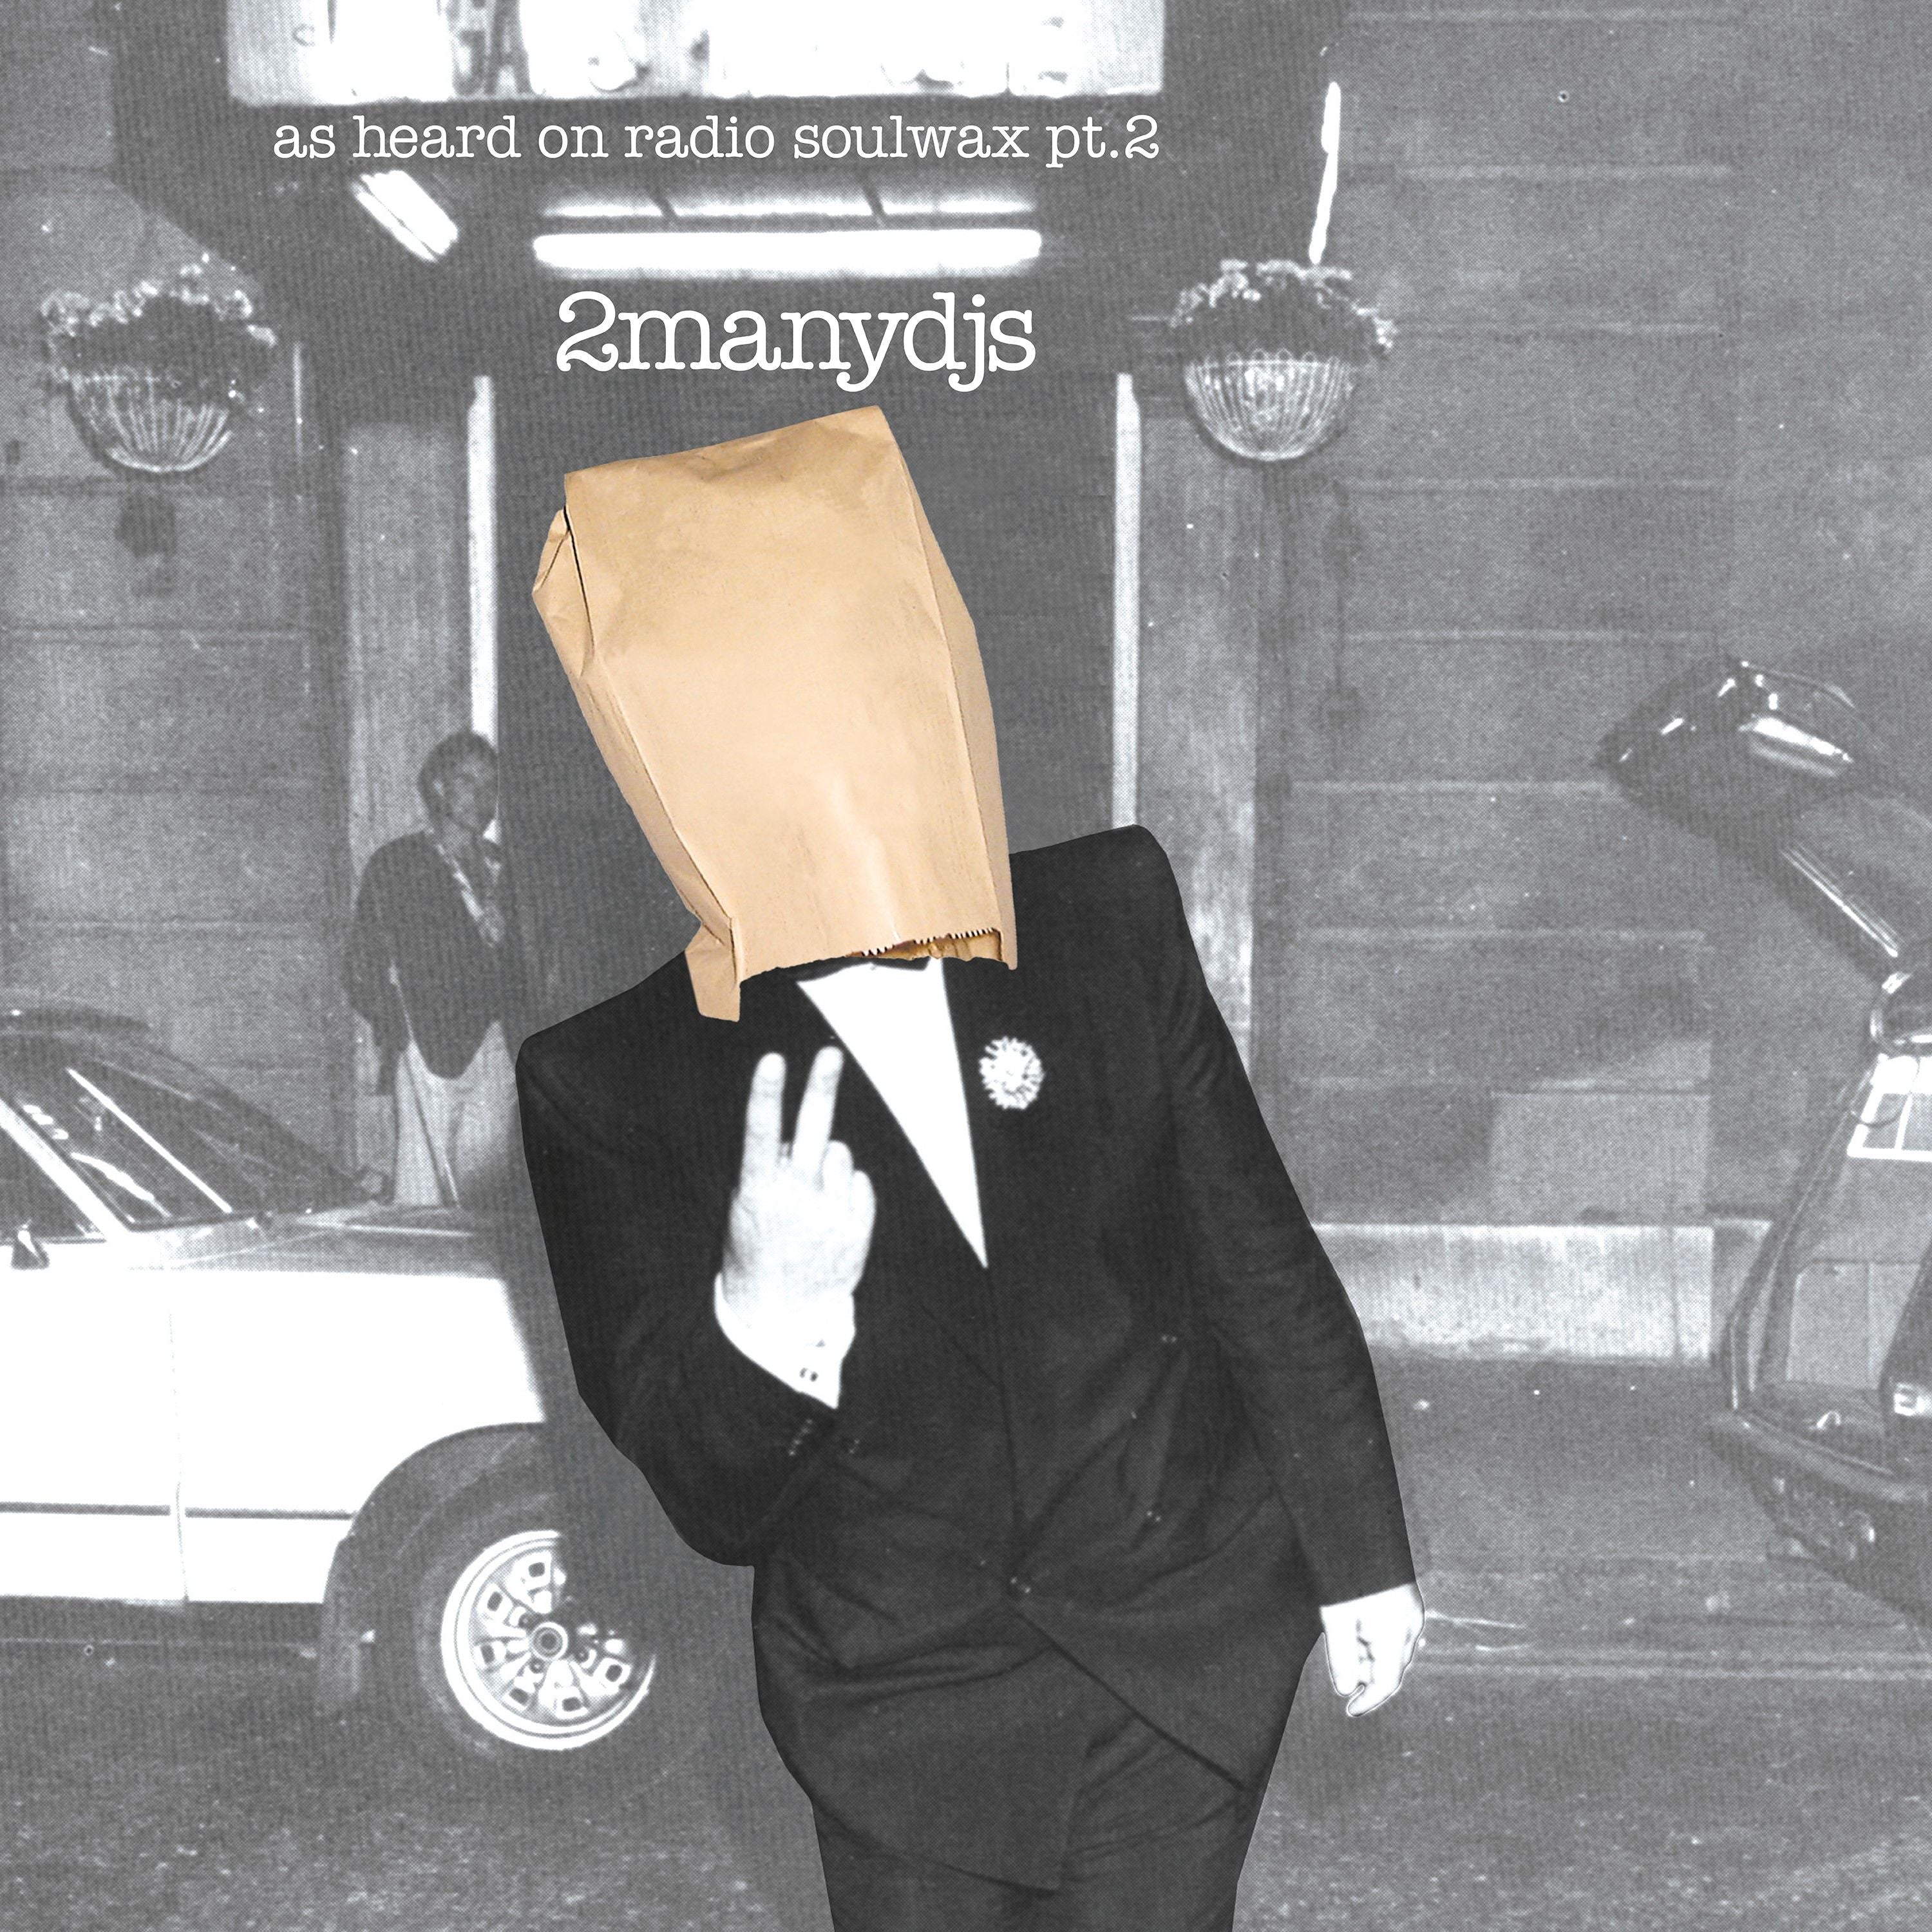 2manydjs - As Heard On Radio Soulwax Pt. 2 (PIAS 40 Edition): CD